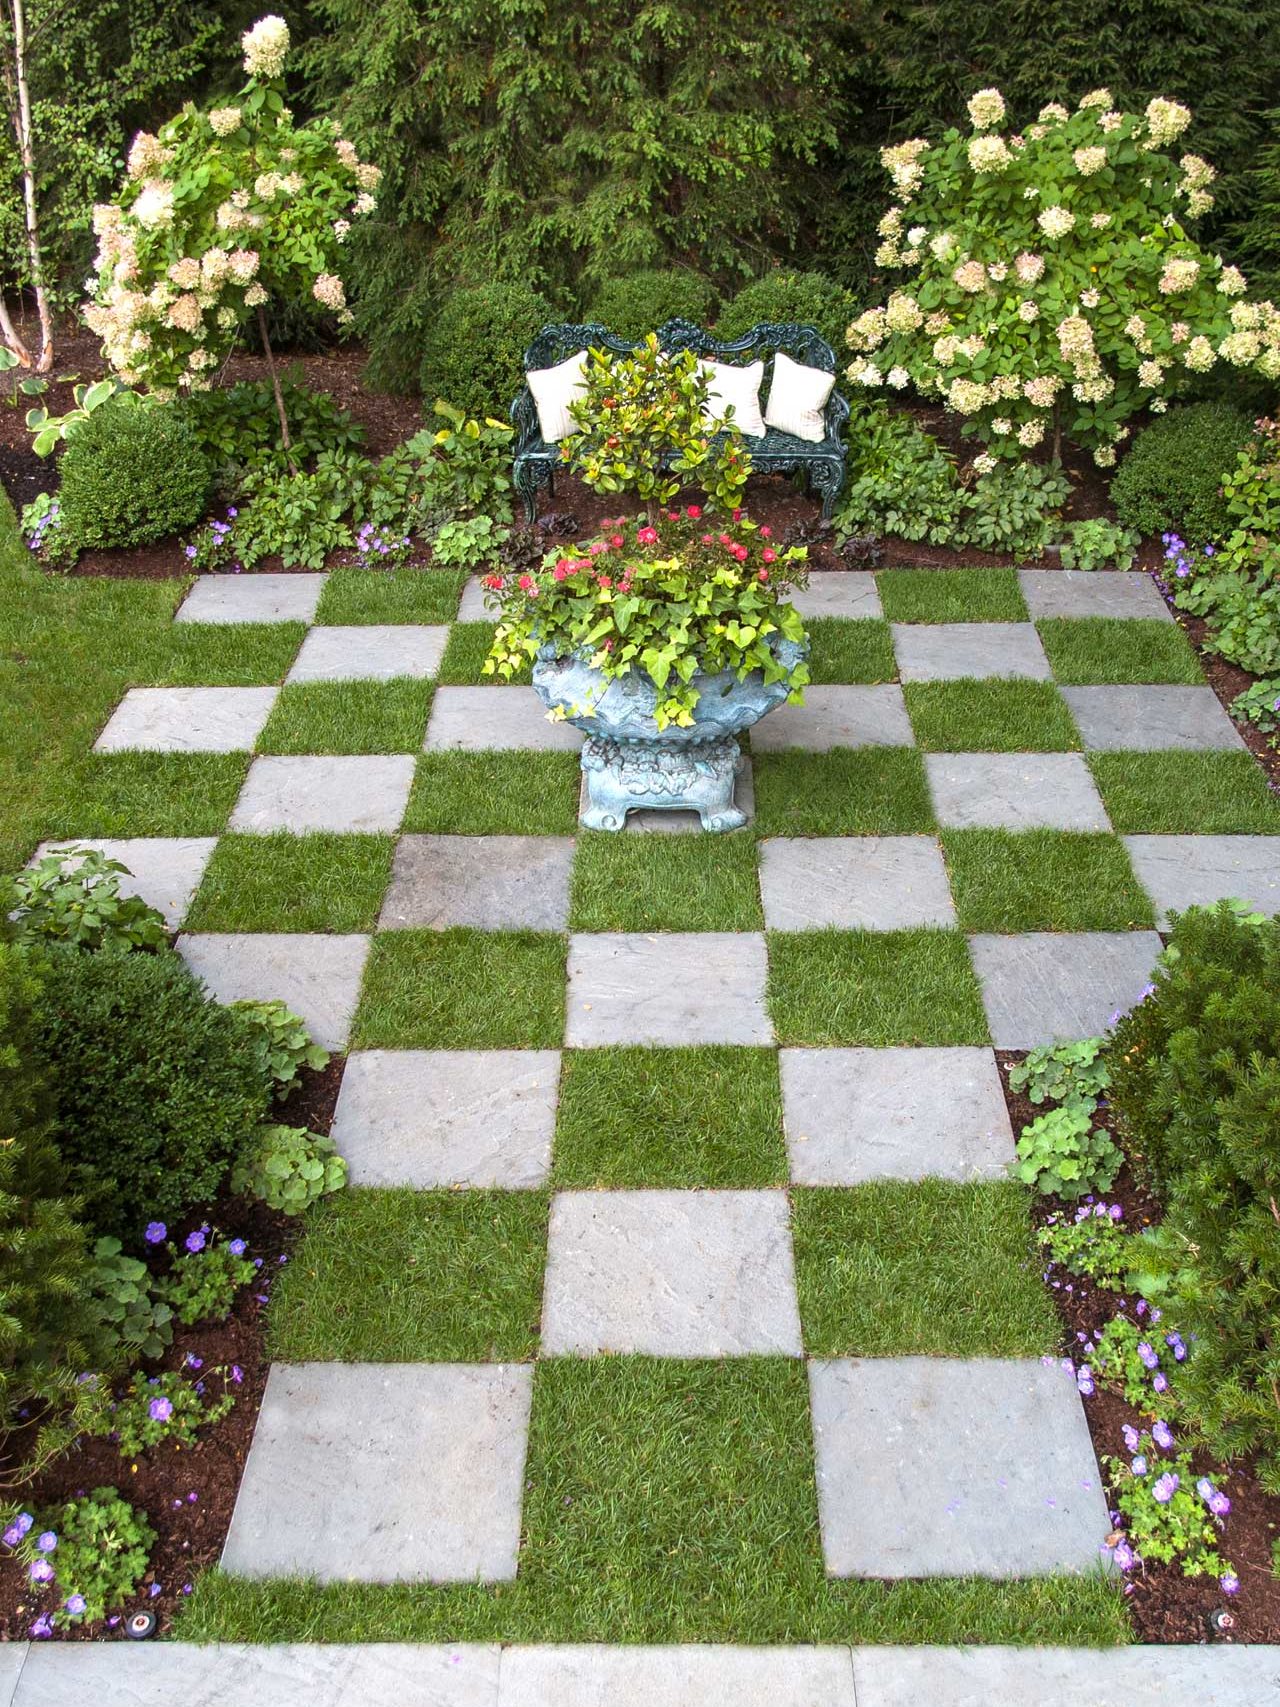 checkerboard design lawn with planters